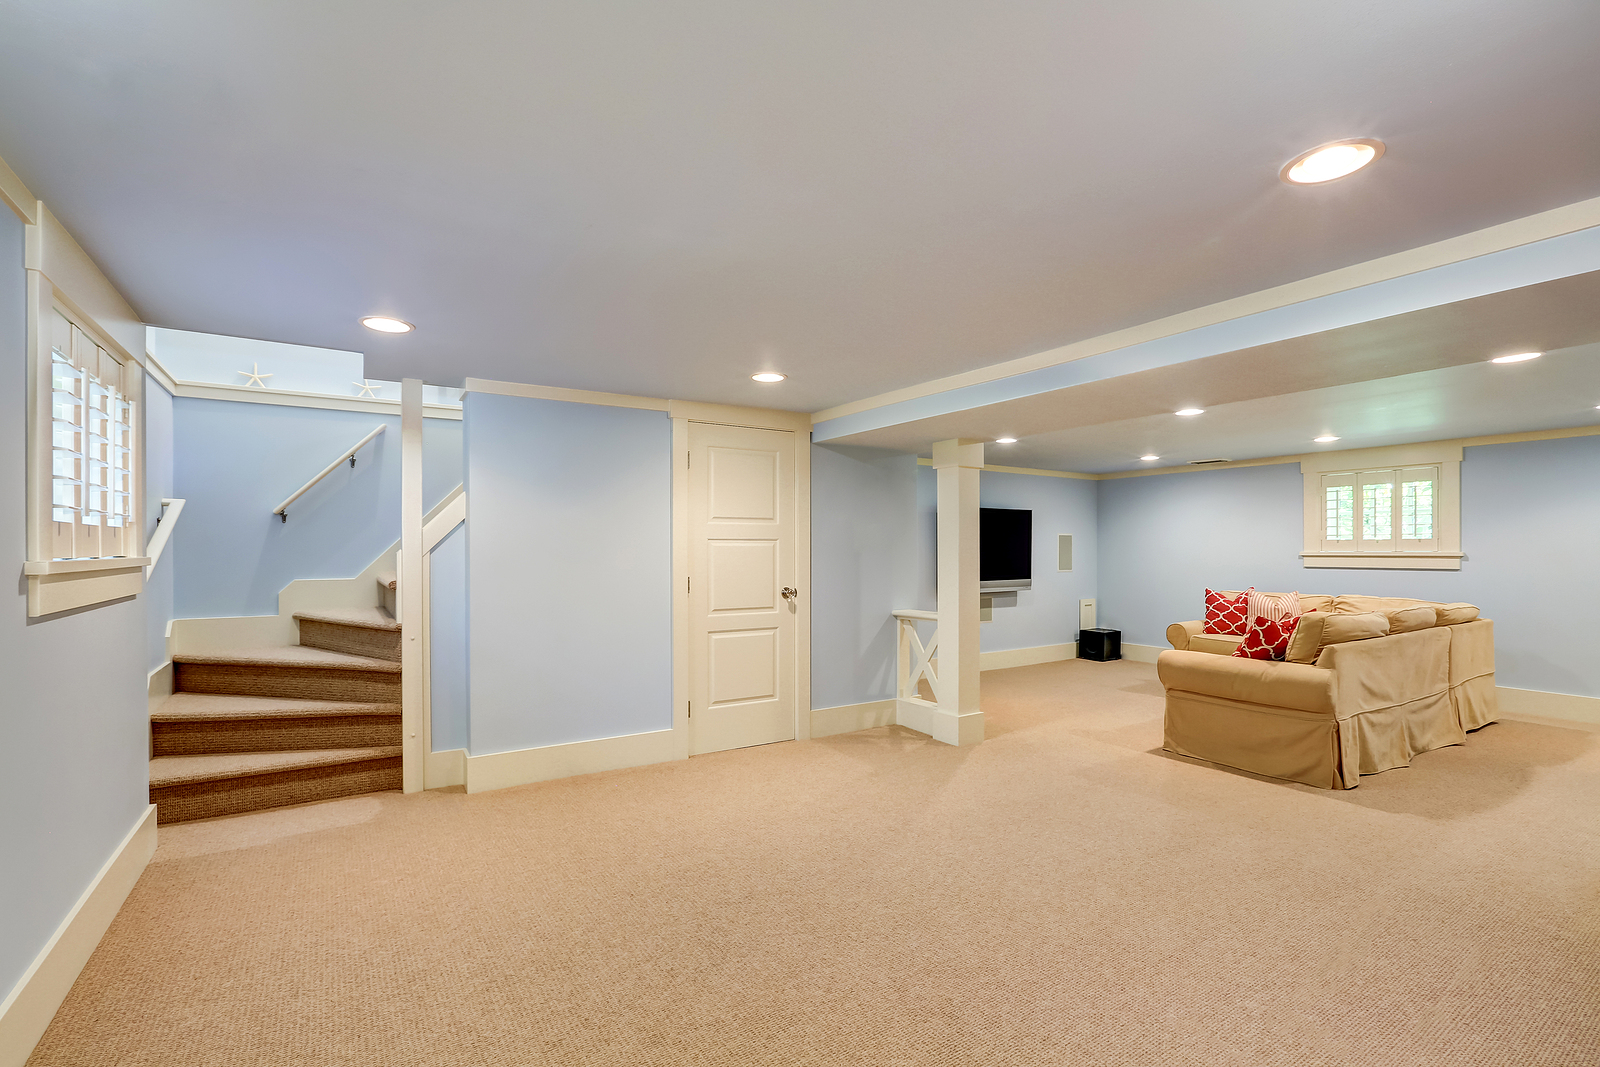 Spacious basement room interior in pastel blue tones. Beige carpet floor and large corner sofa with TV. Northwest USA